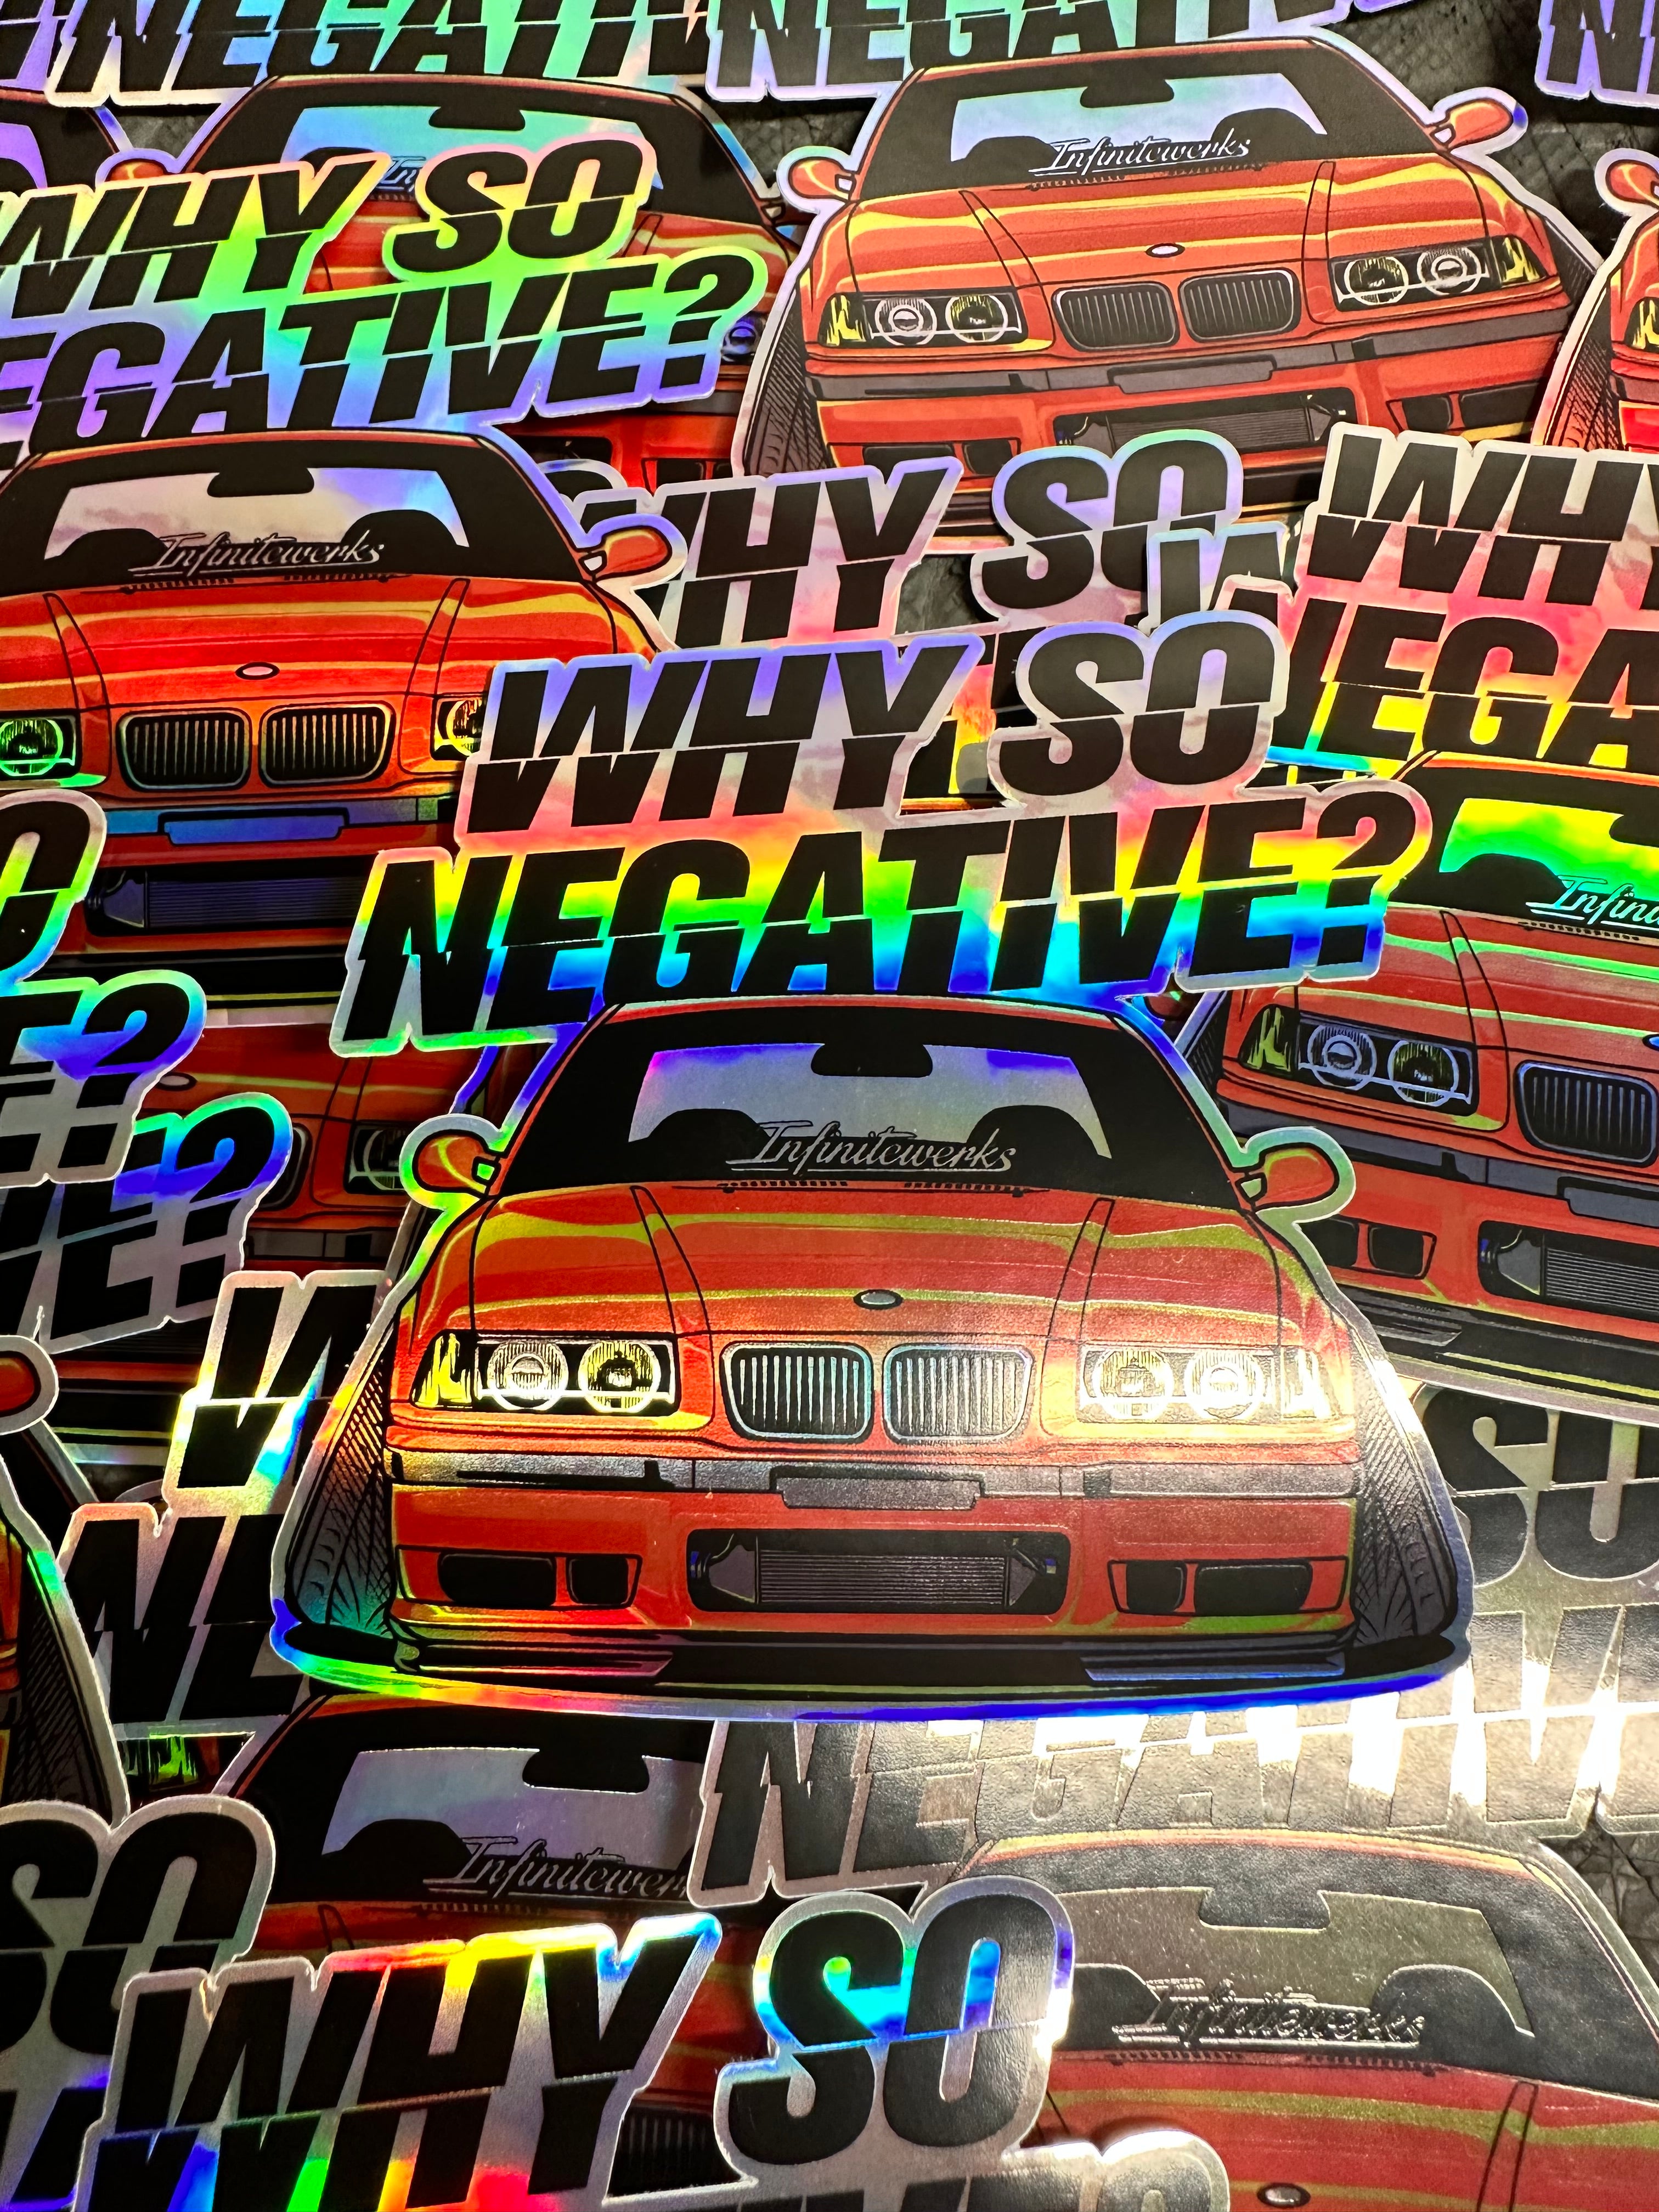 INF "Why So Negative" Sticker